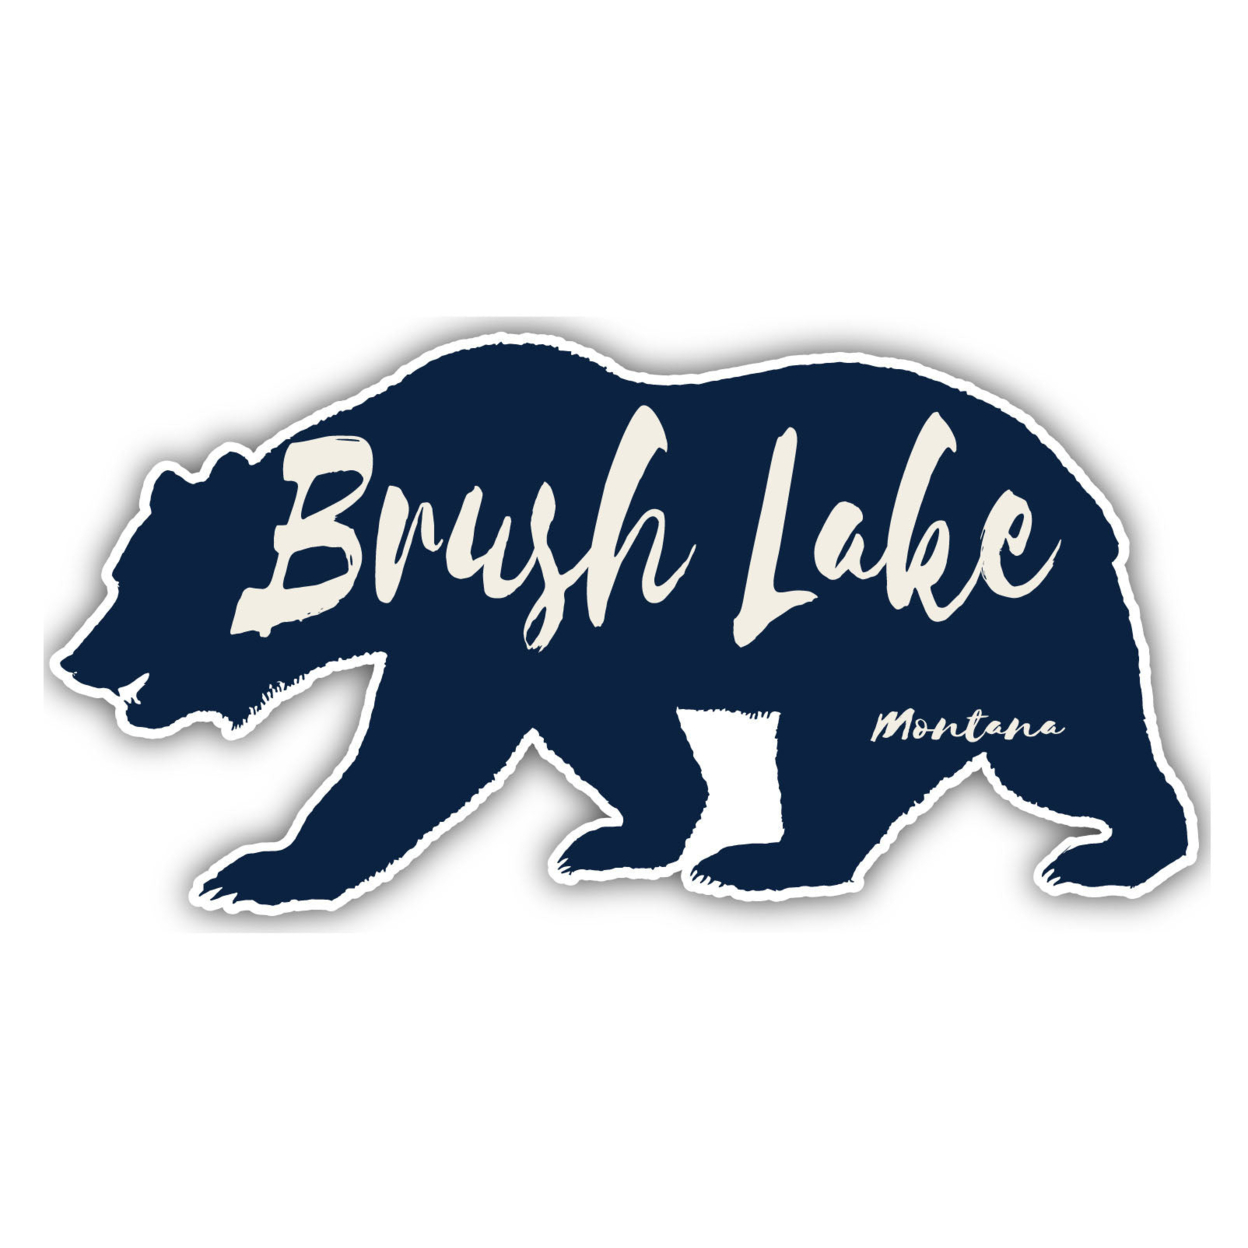 Brush Lake Montana Souvenir Decorative Stickers (Choose Theme And Size) - Single Unit, 8-Inch, Bear